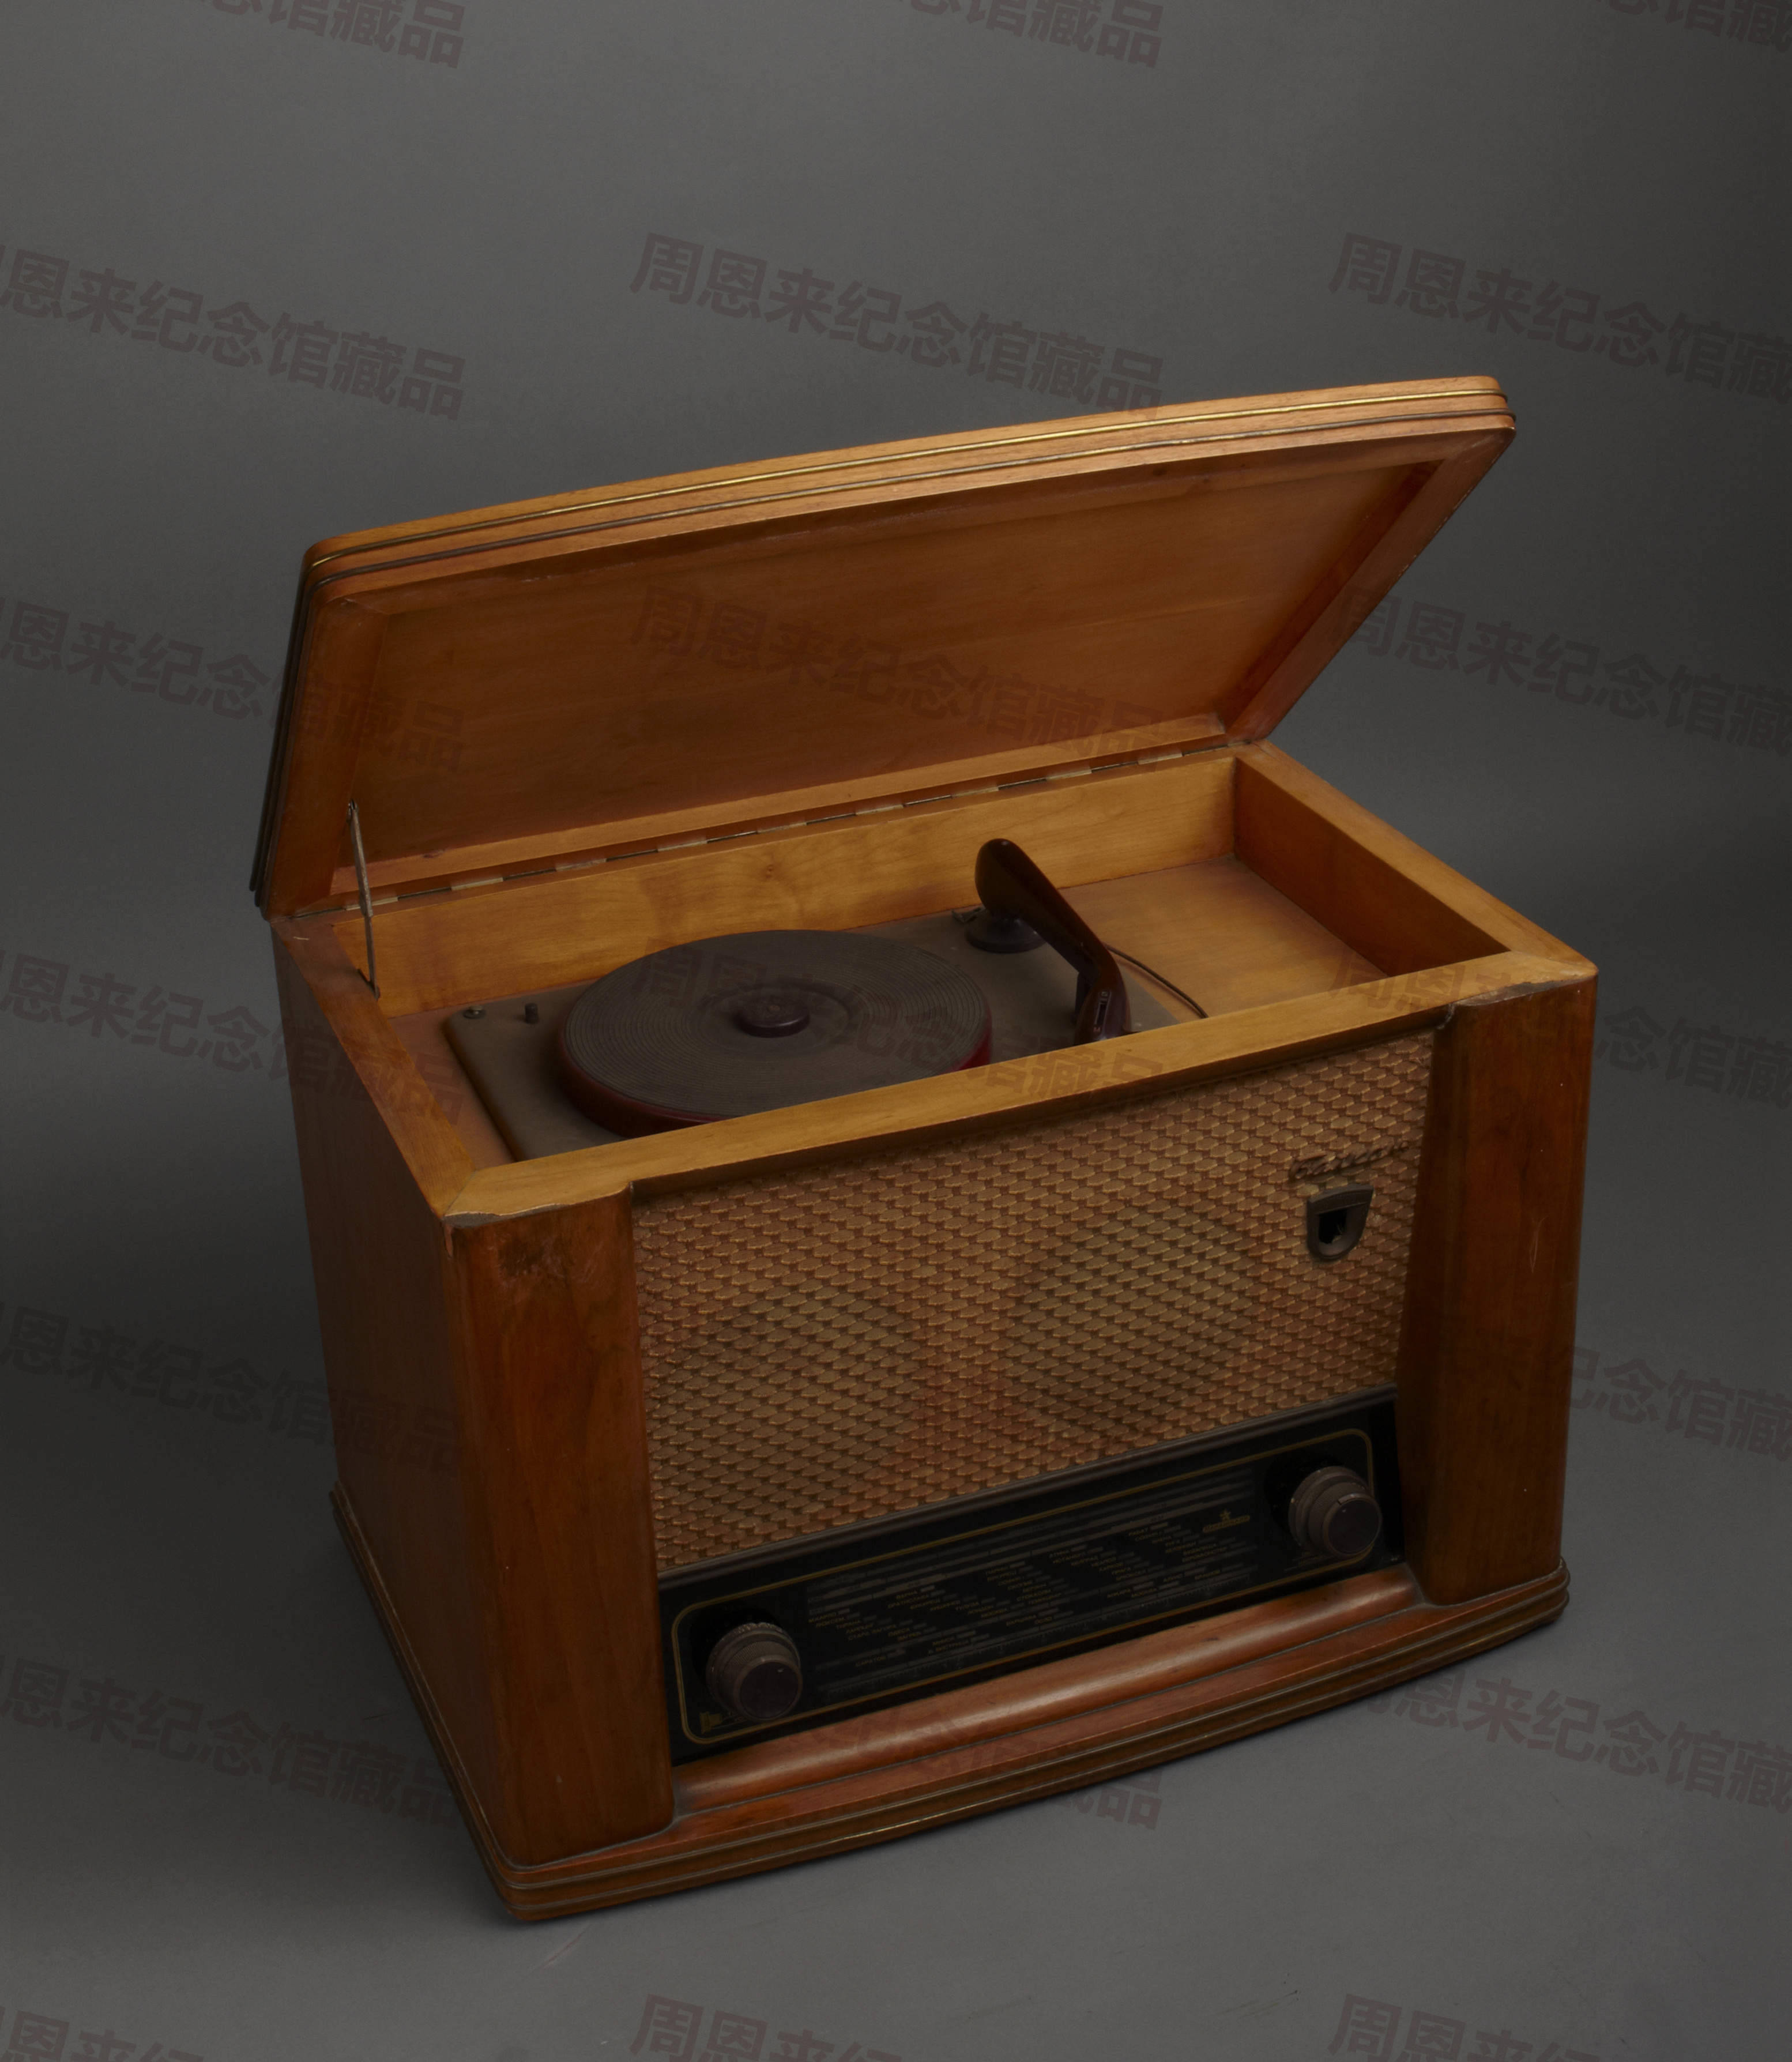 W021 周恩来50年代用过的收音机.jpg